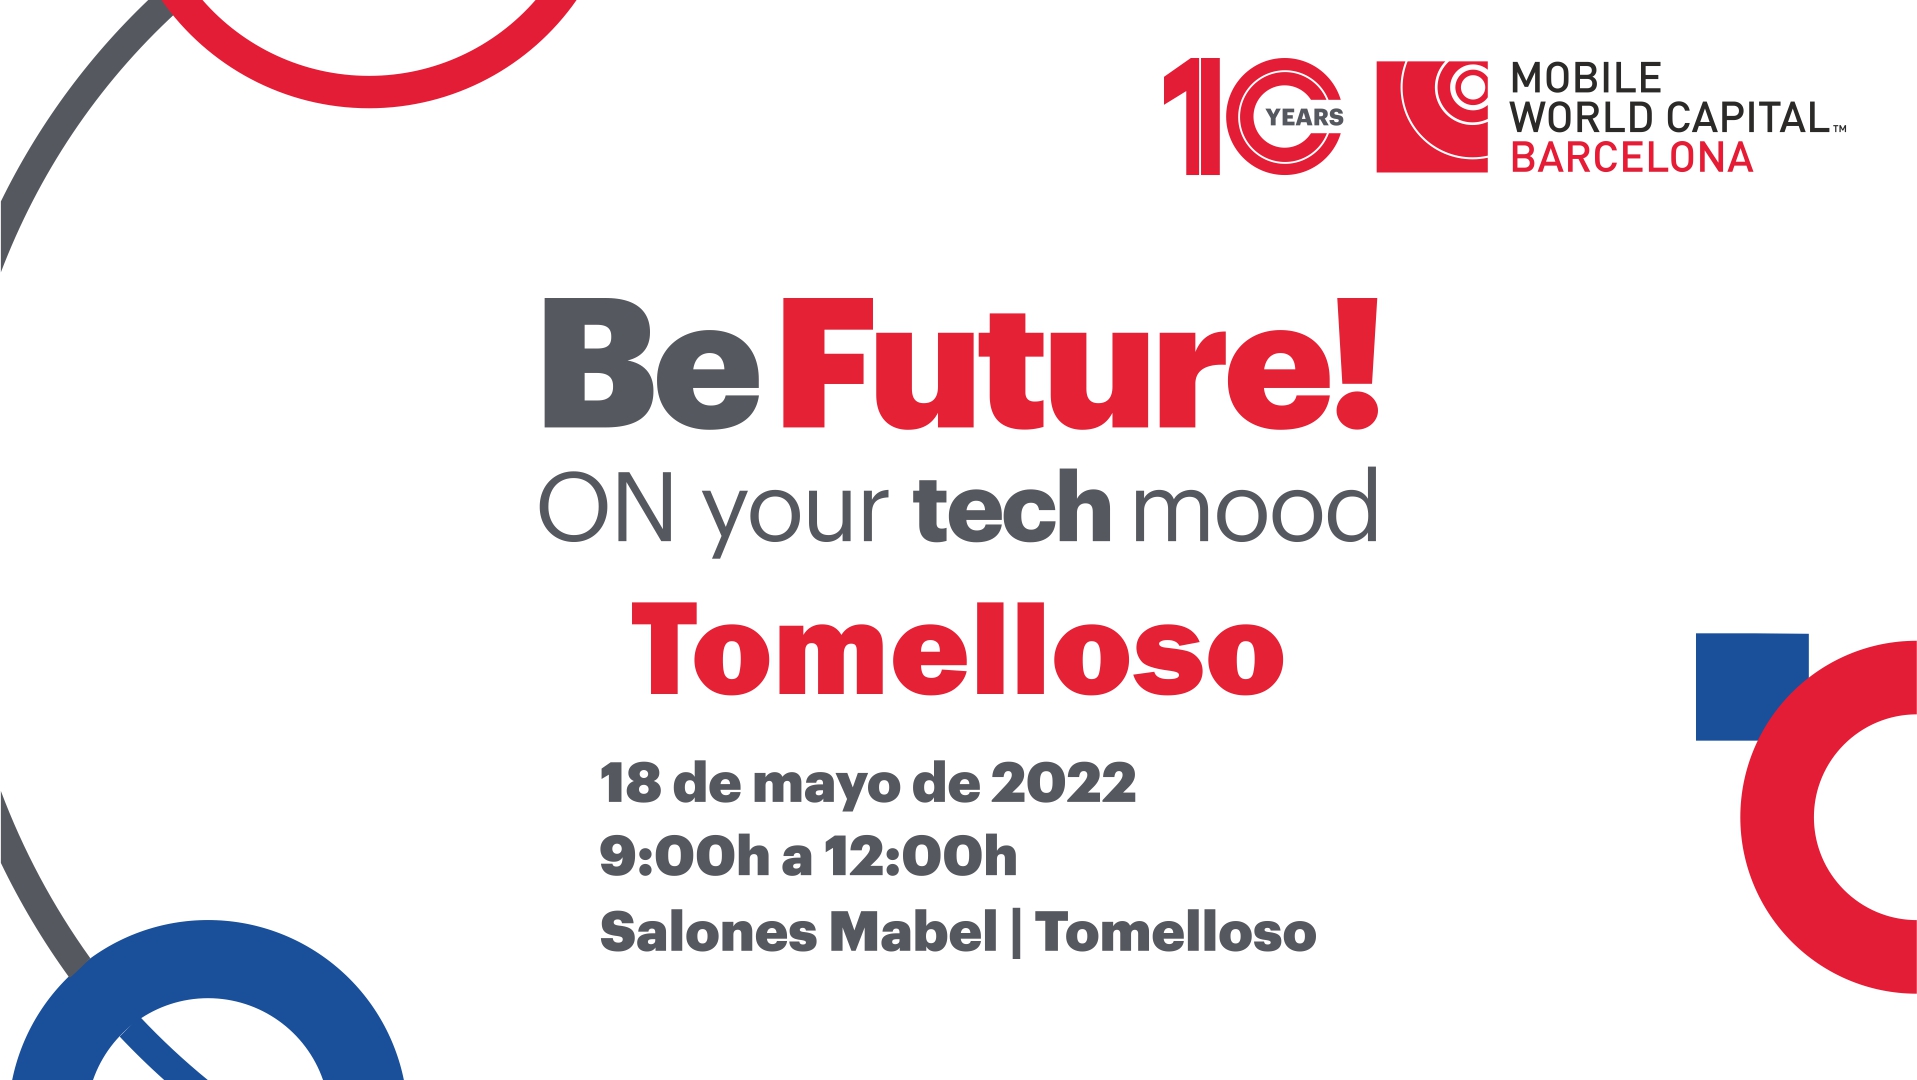 Be Future! de Mobile World Capital Barcelona llega a Tomelloso